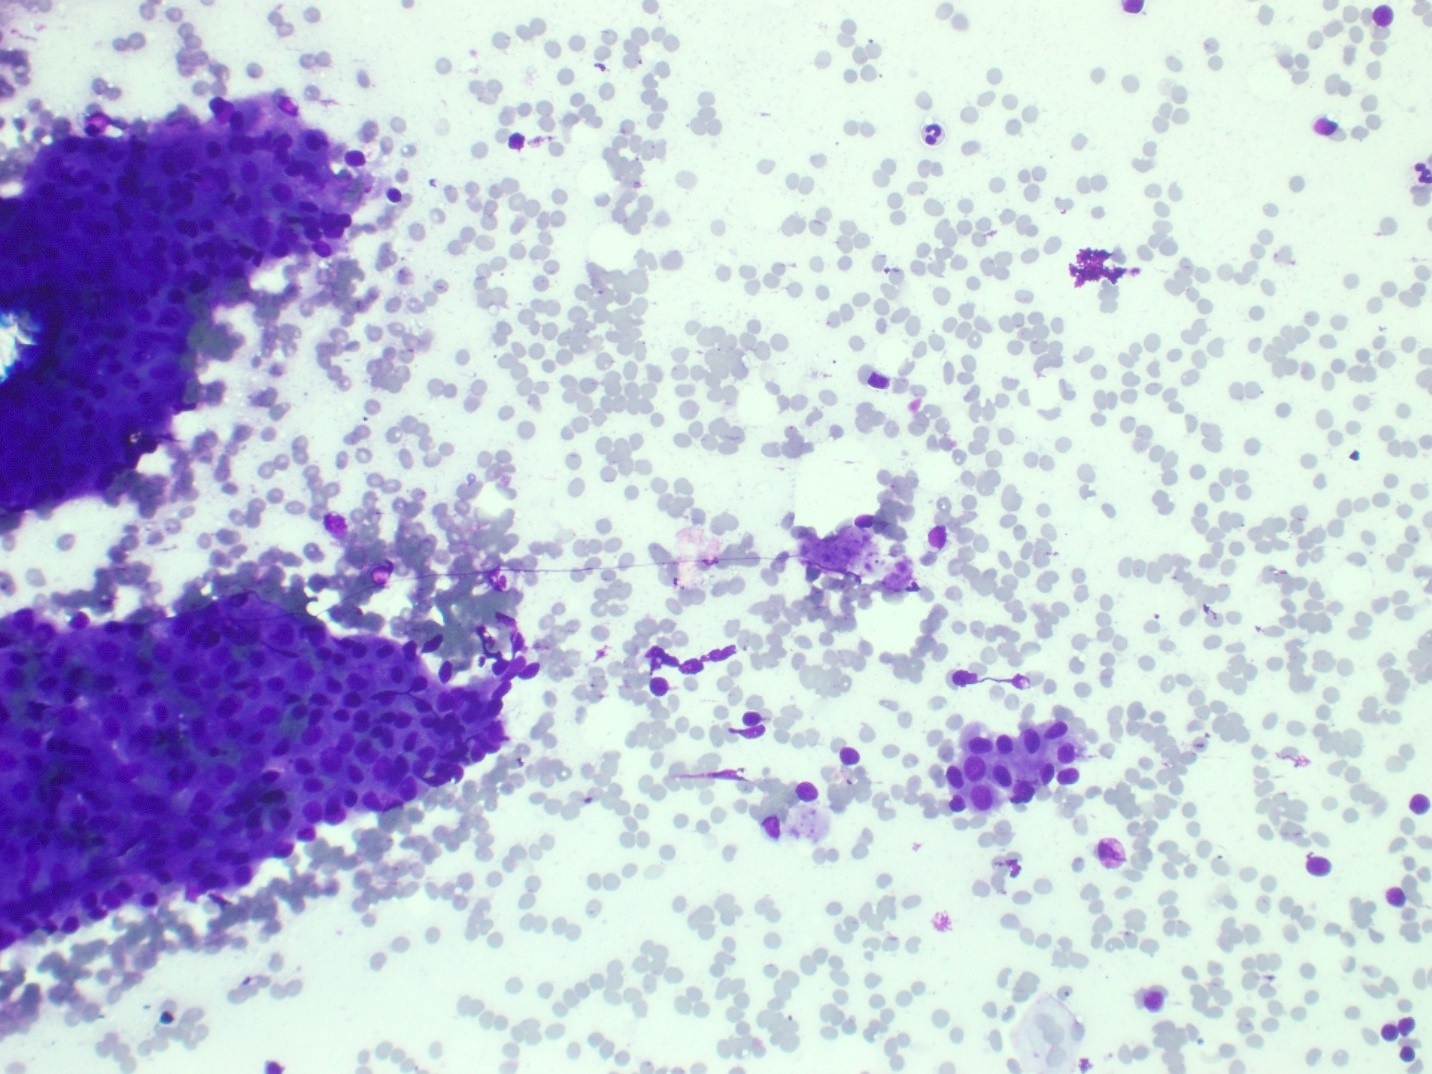 Oncocytic cells with dense cytoplasm